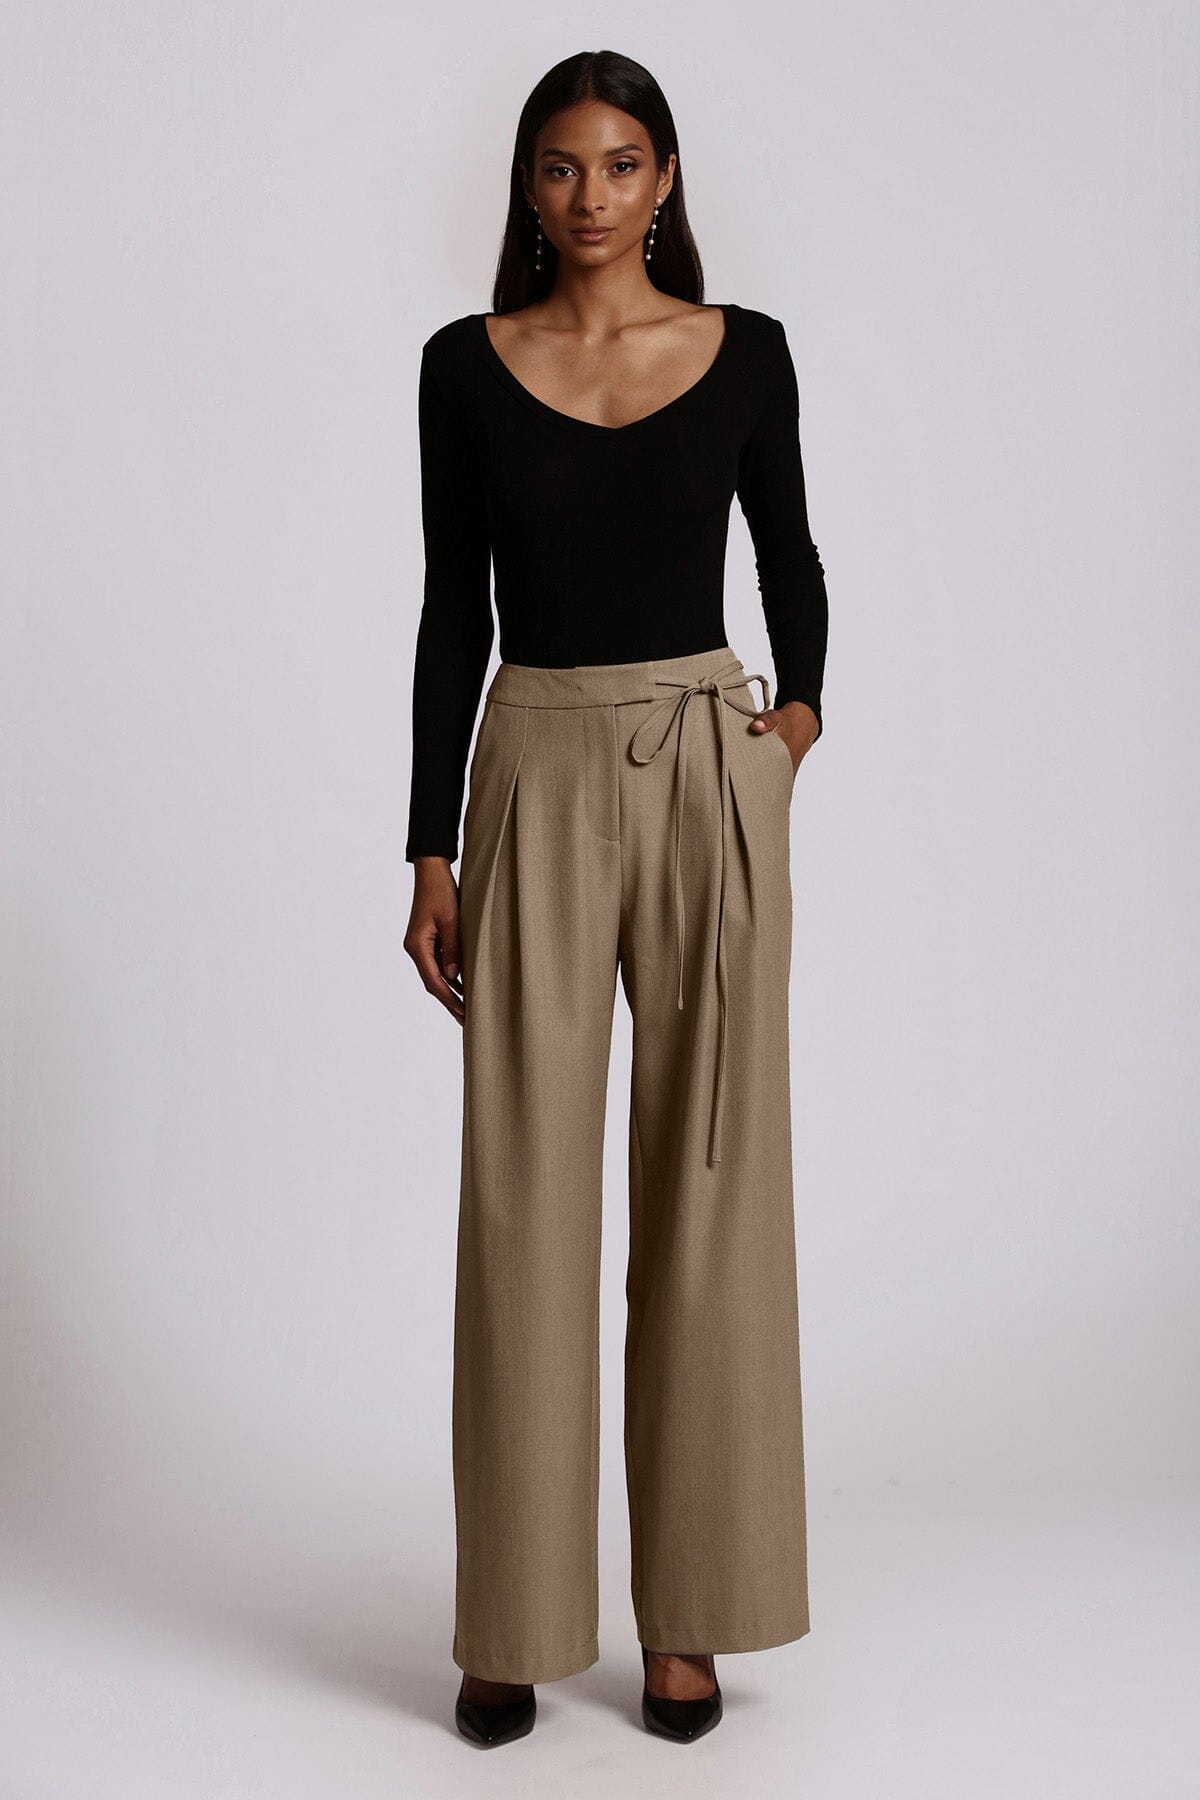 taupe brown wide leg tie belt trouser pants figure flattering lightweight work appropriate bottoms for women